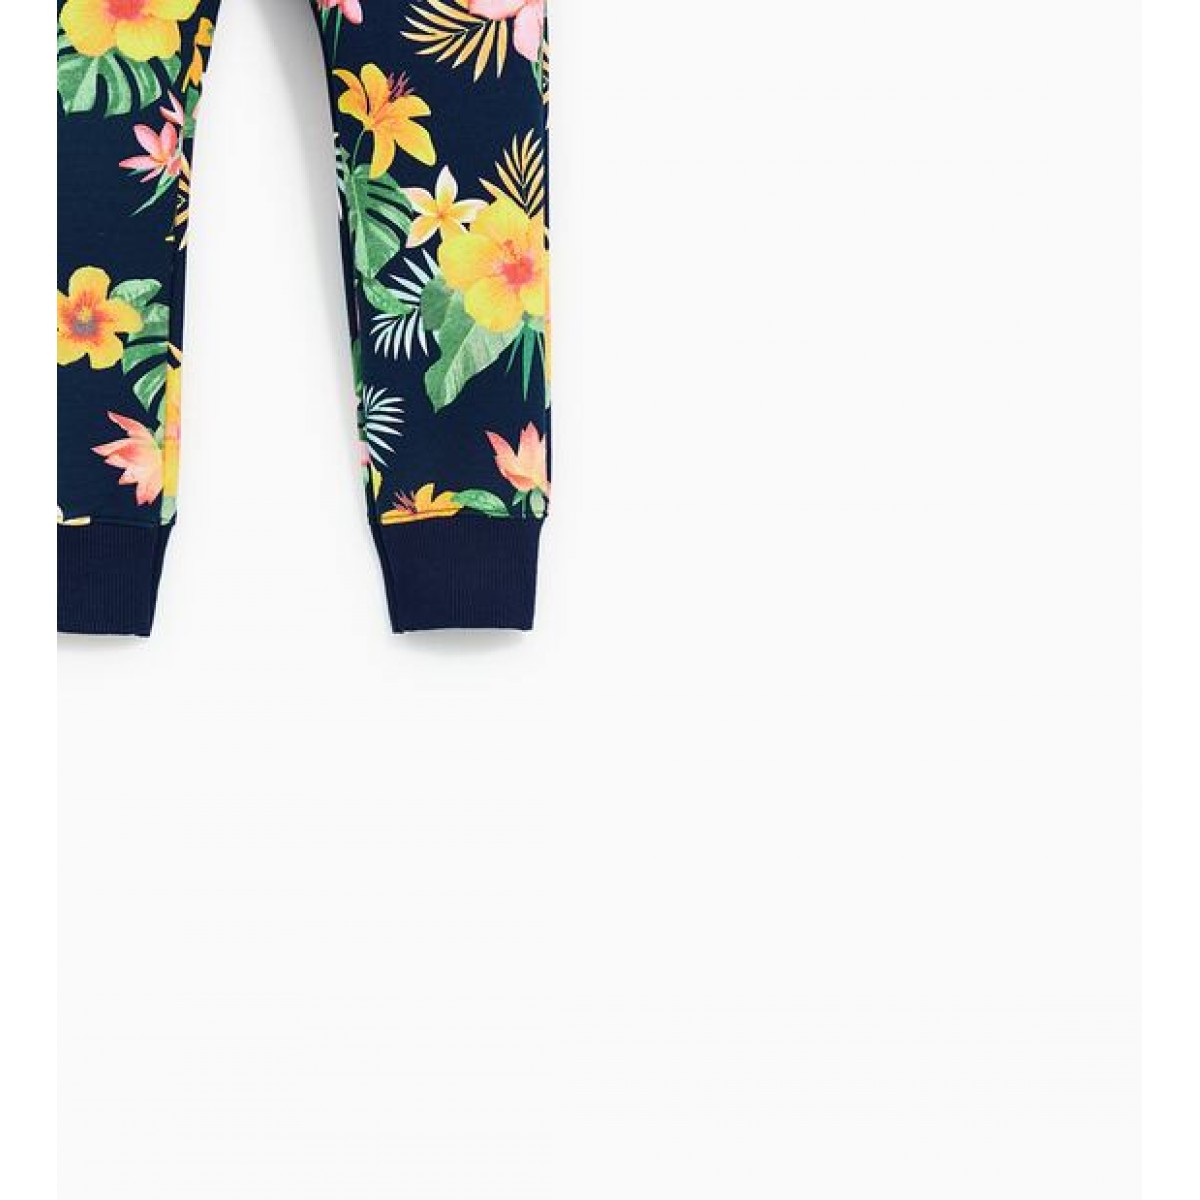 Zara Plush Jersey Tropical Trousers